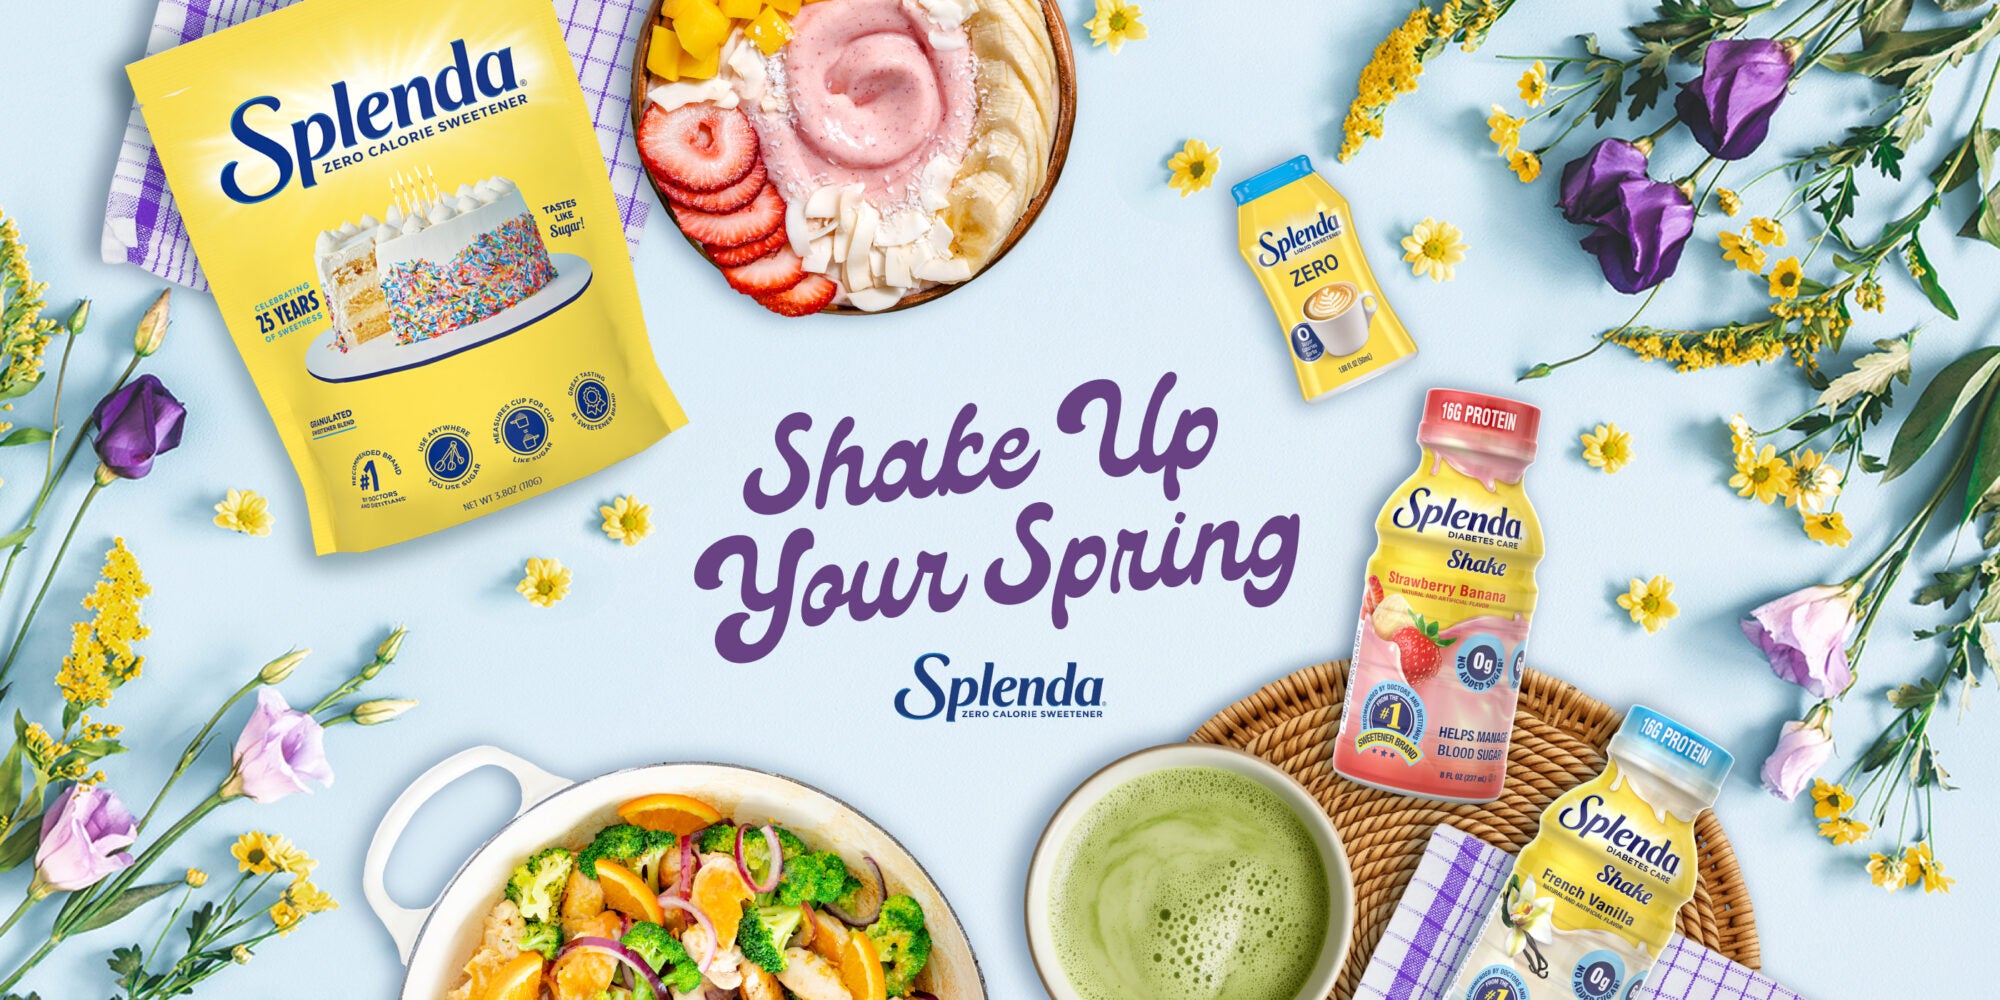 Shake Up Your Spring with Splenda